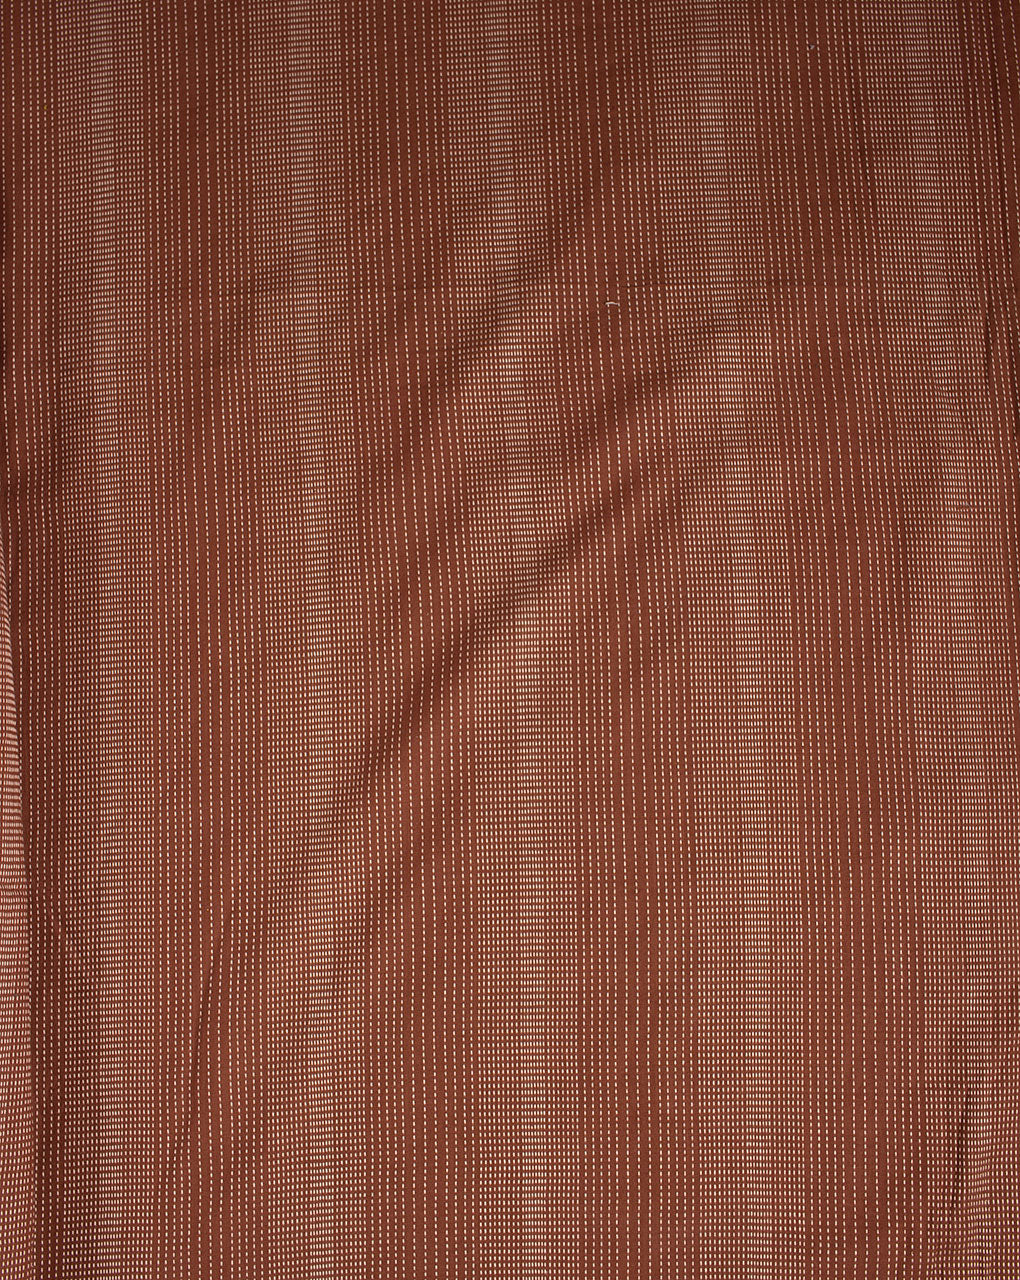 Kantha Loom Textured Cotton Fabric